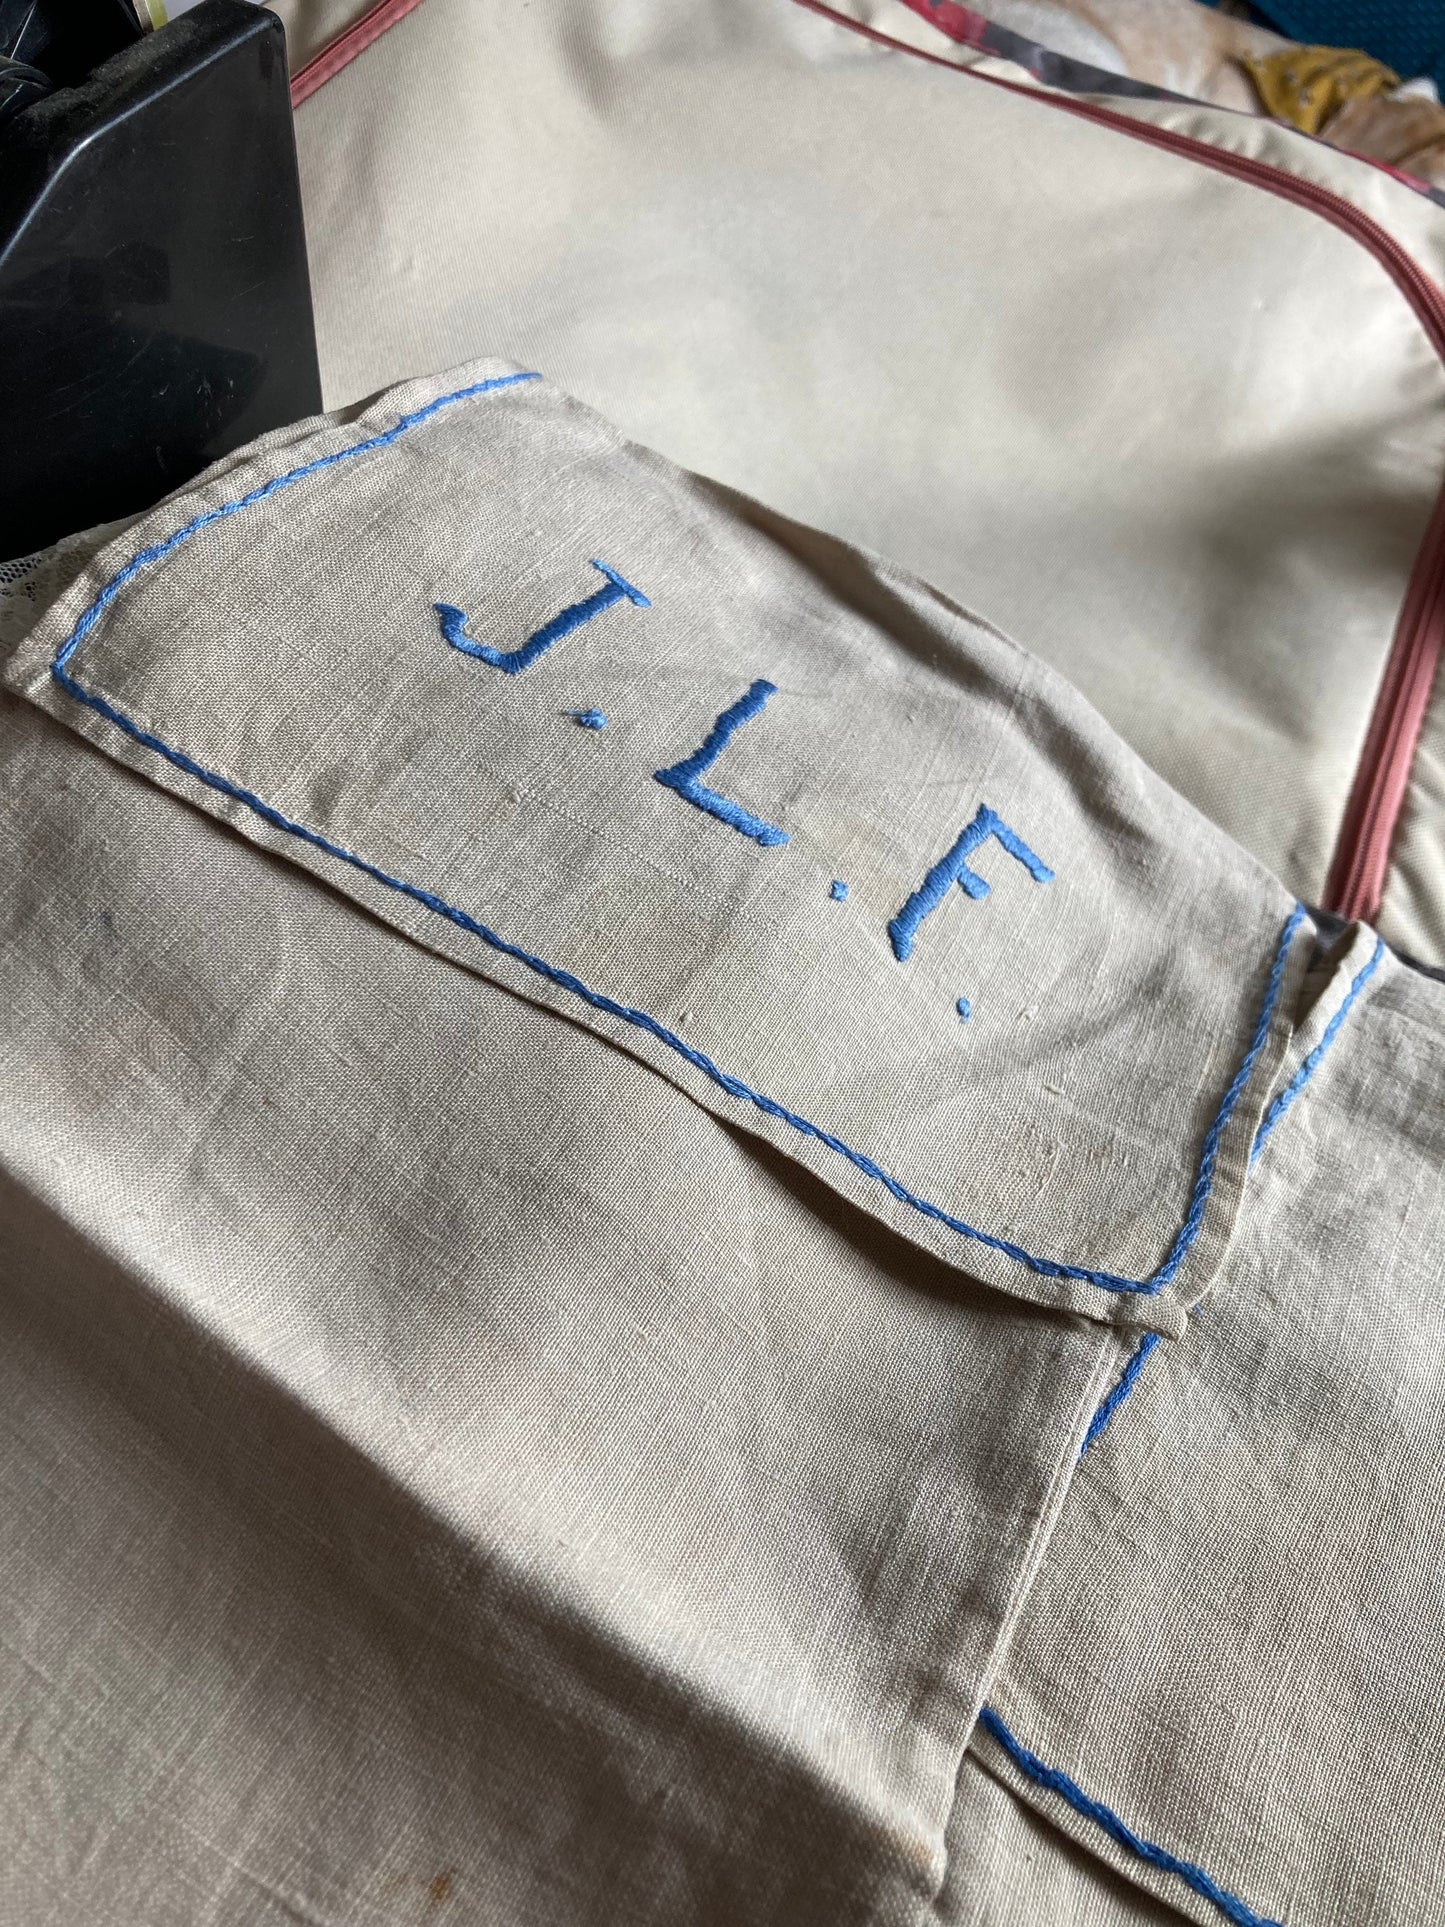 2 x Monogrammed J L F shoe bag Antique embroidered folding travel storage case for shoes